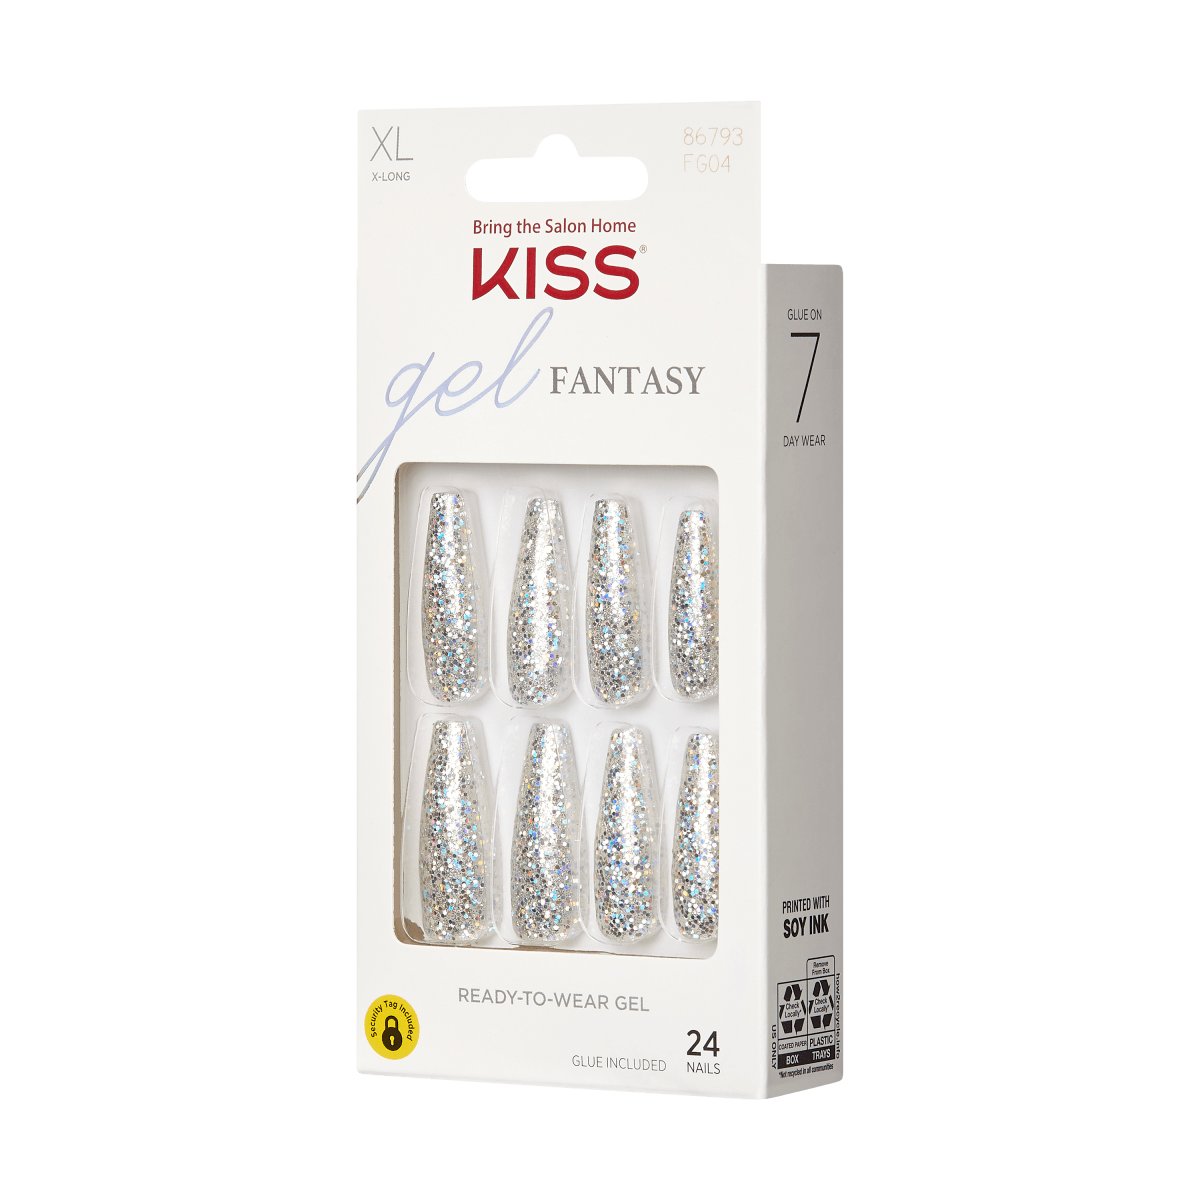 KISS Gel Fantasy Nails - Best Friend